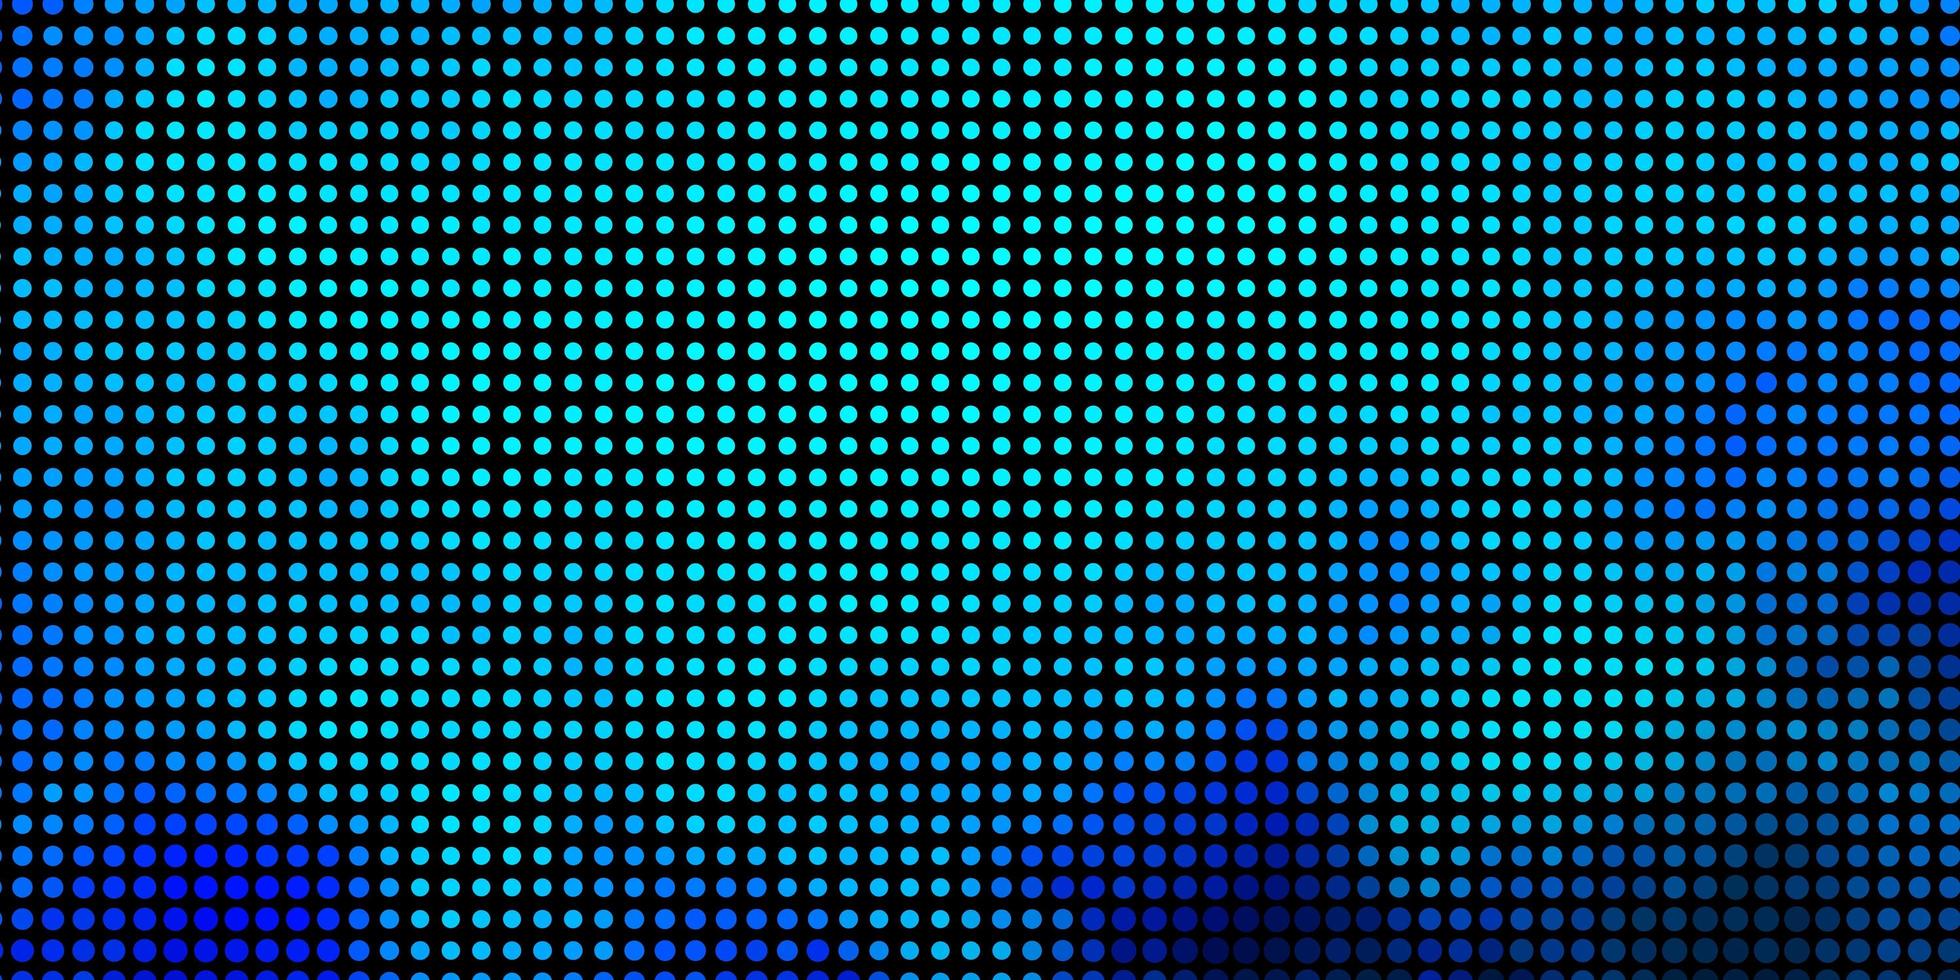 diseño de vector azul oscuro con formas circulares ilustración colorida con puntos degradados en patrón de estilo natural para cortinas de papel tapiz